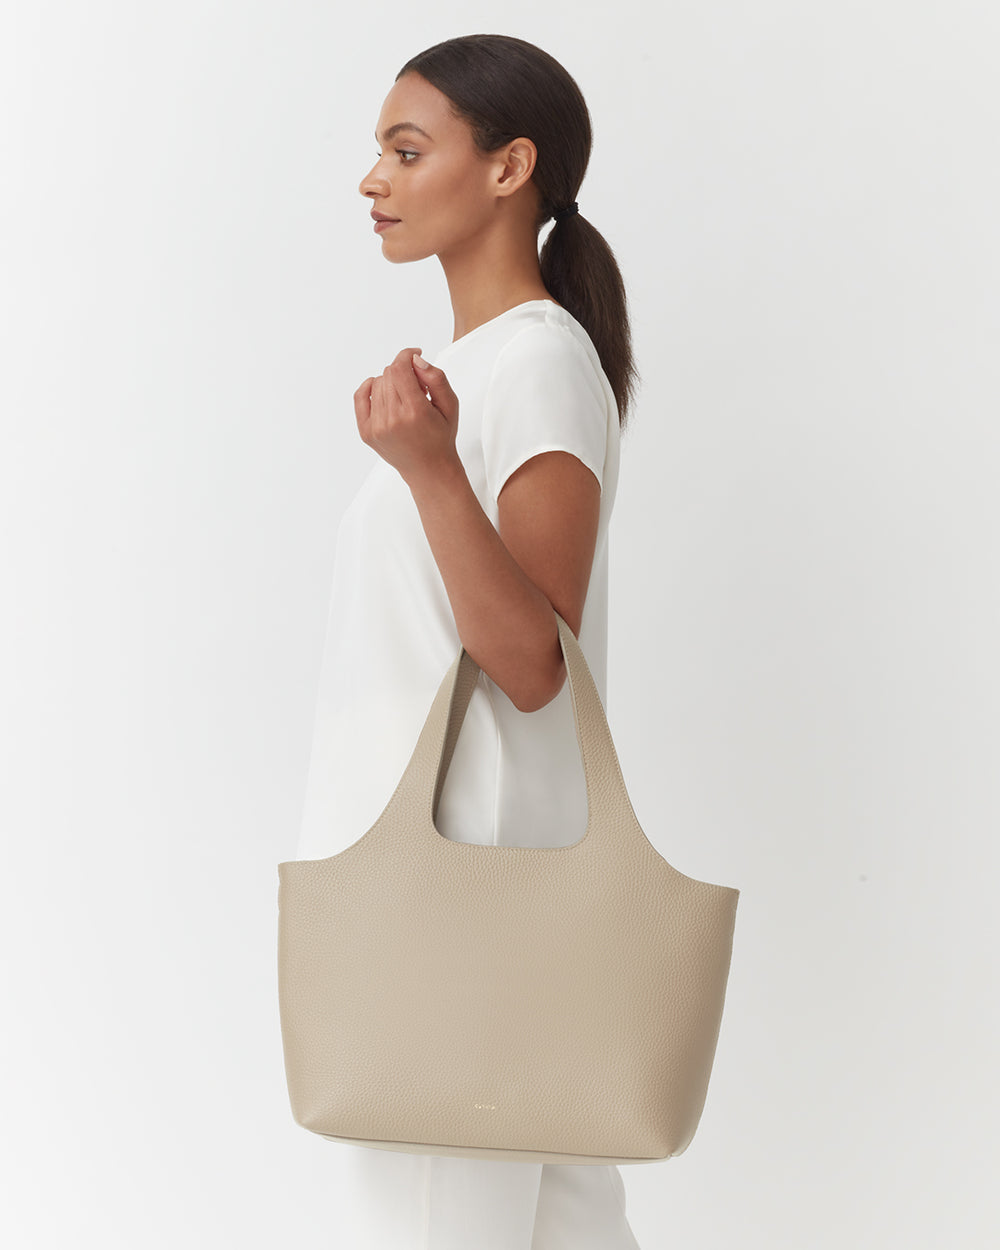 Woman standing sideways holding a large handbag.